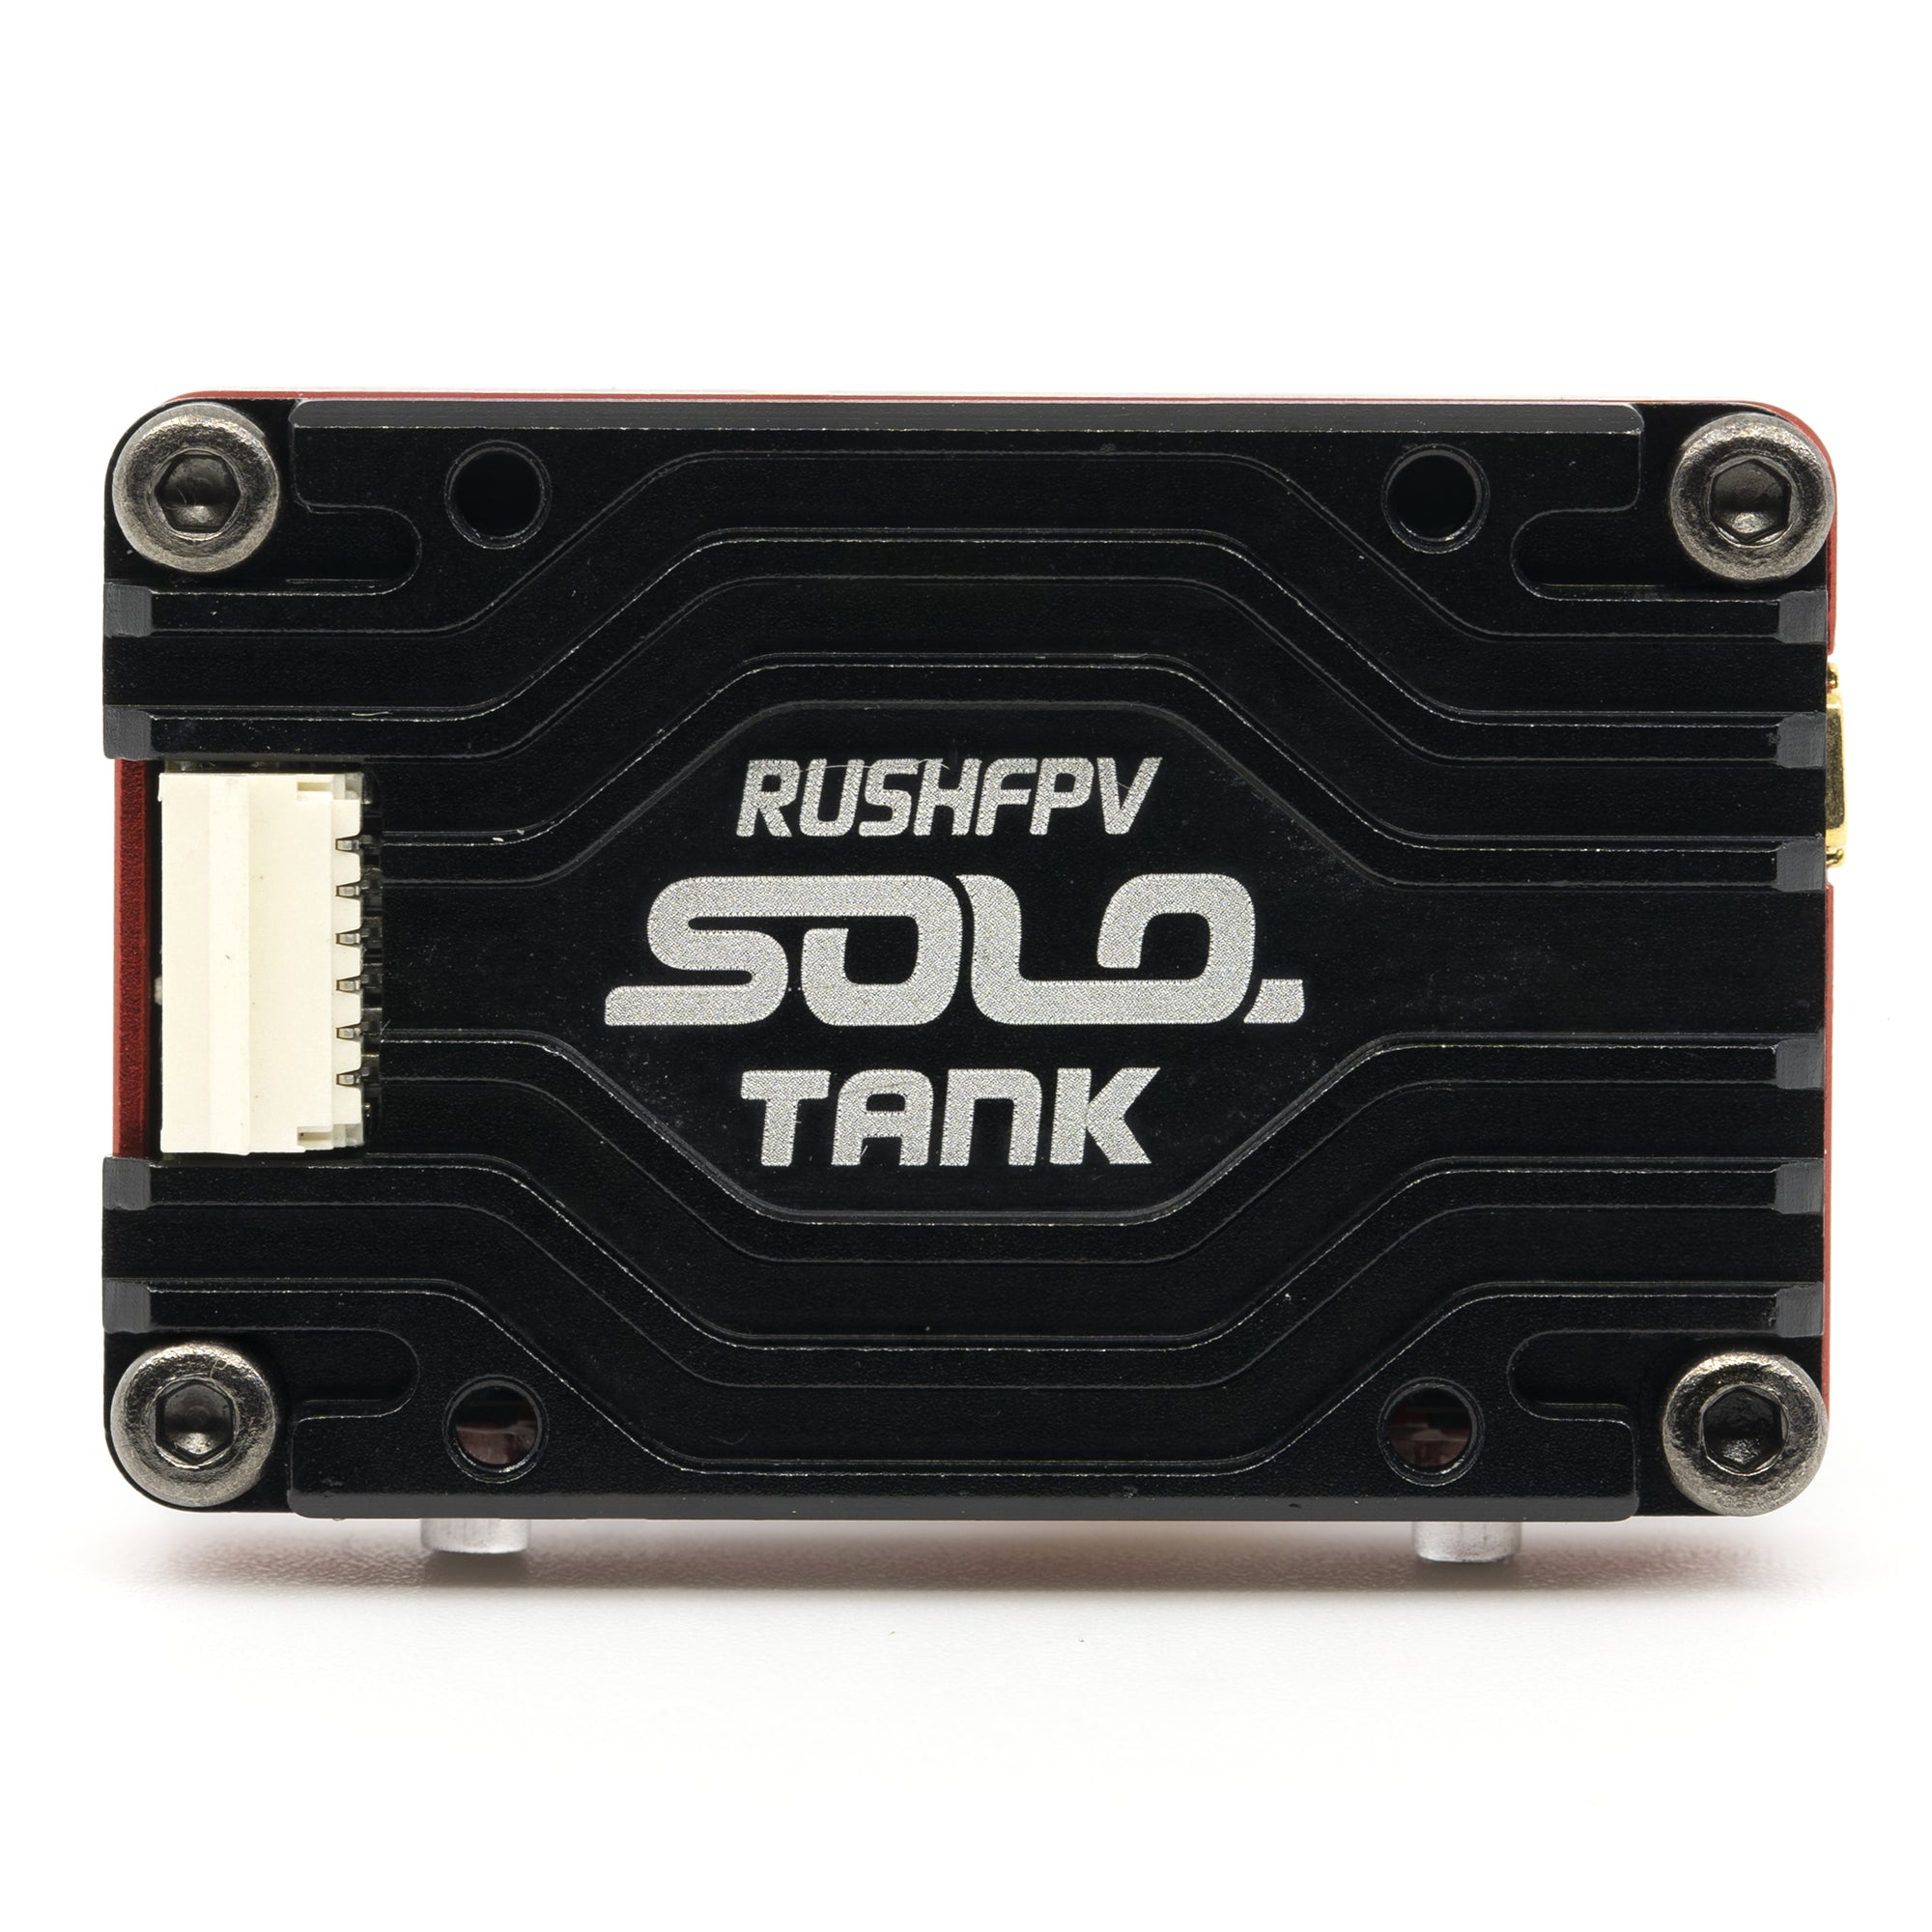 Rush FPV Tank Solo 25-1000mW 5.8GHz VTX w/ Smart Audio - MMCX